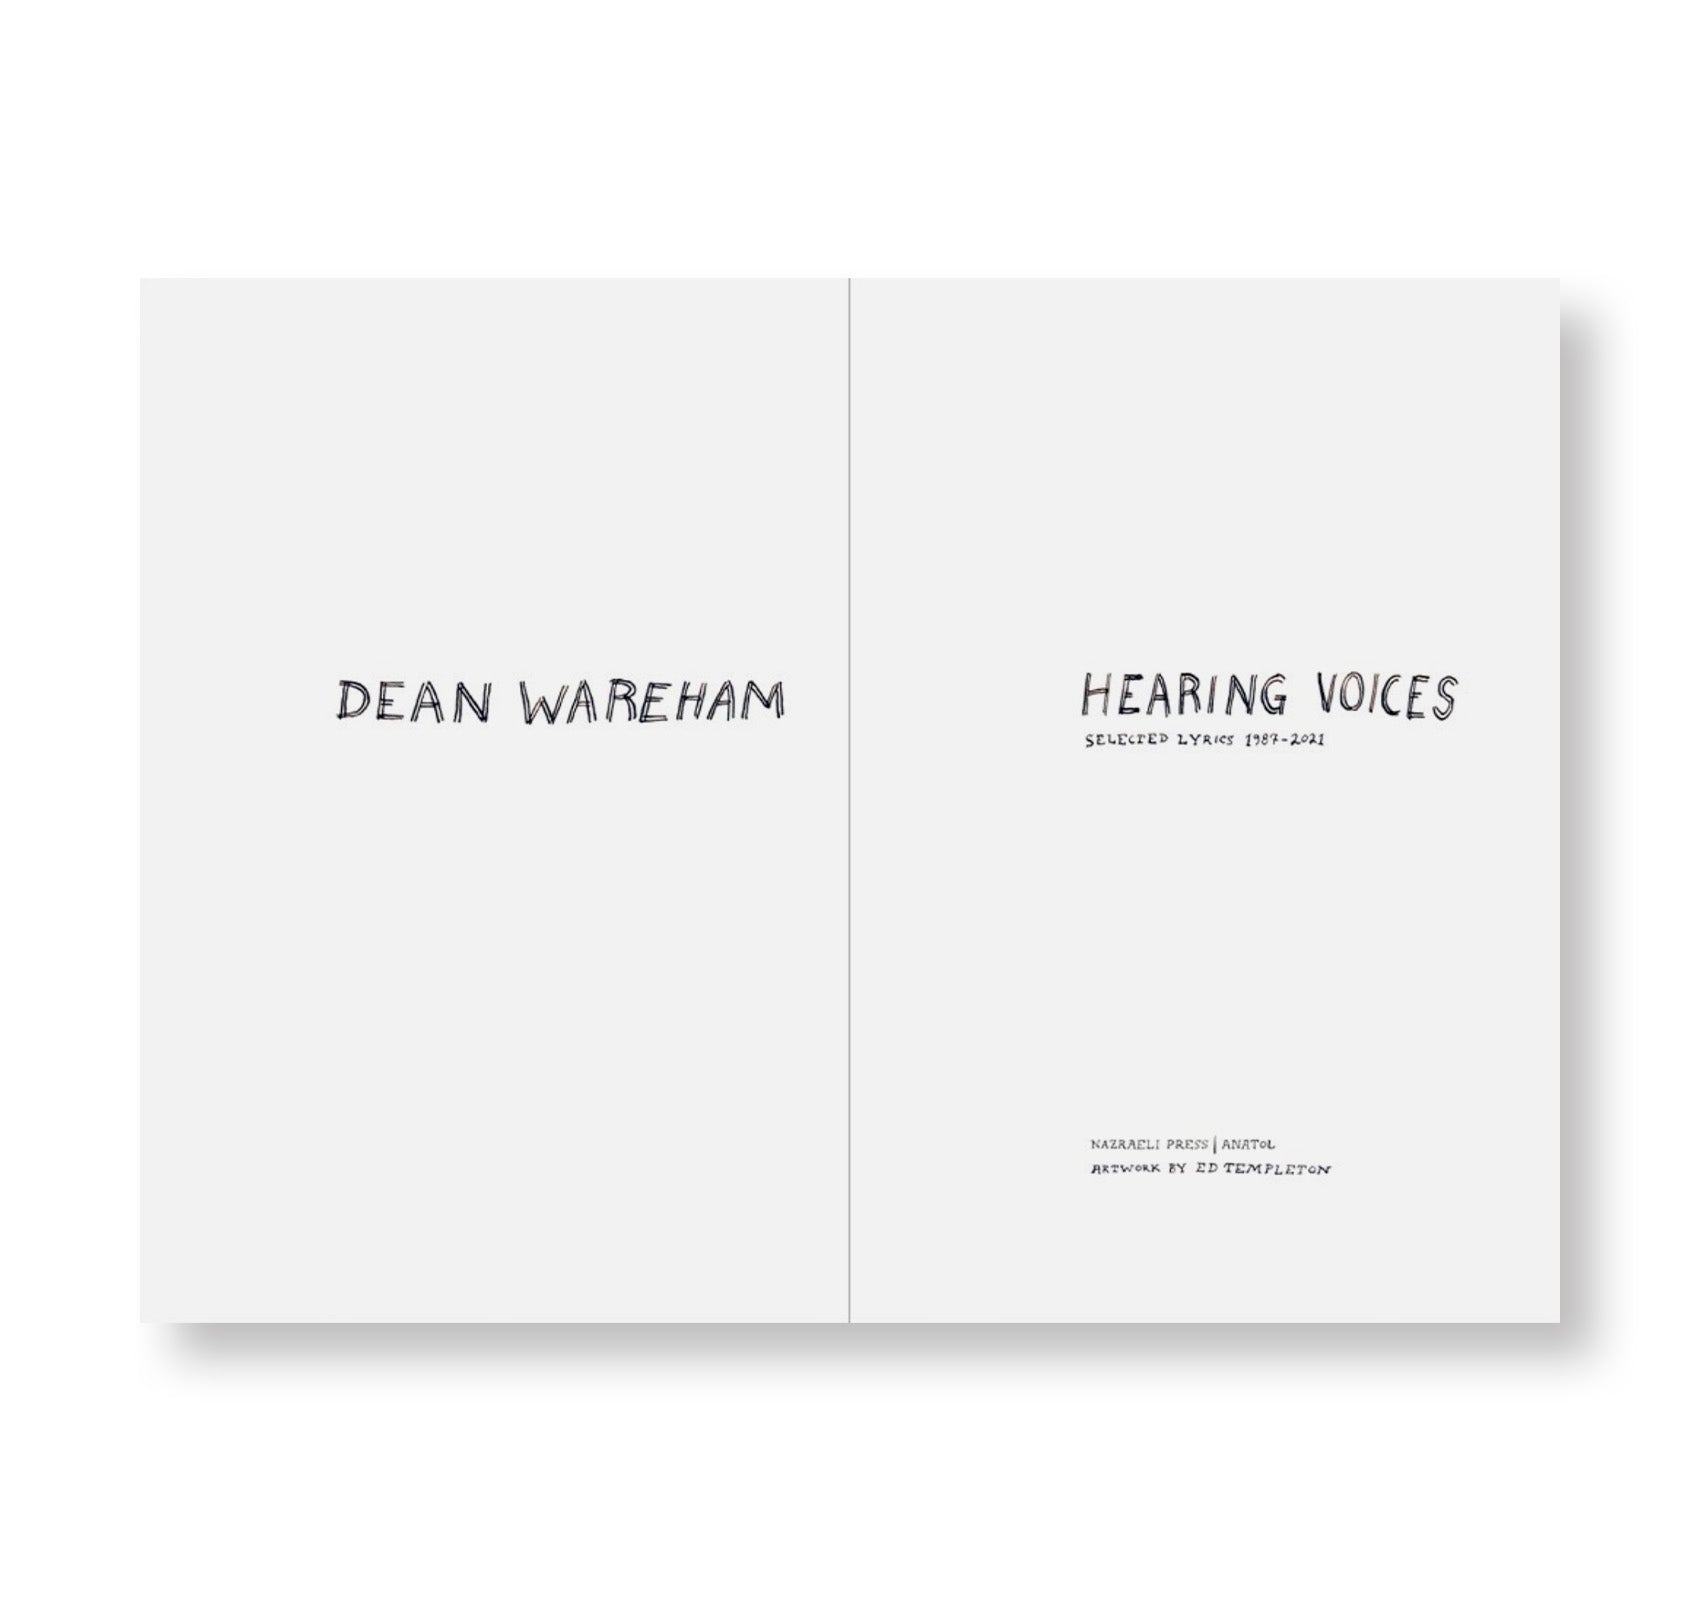 HEARING VOICES by Dean Wareham, Ed Templeton